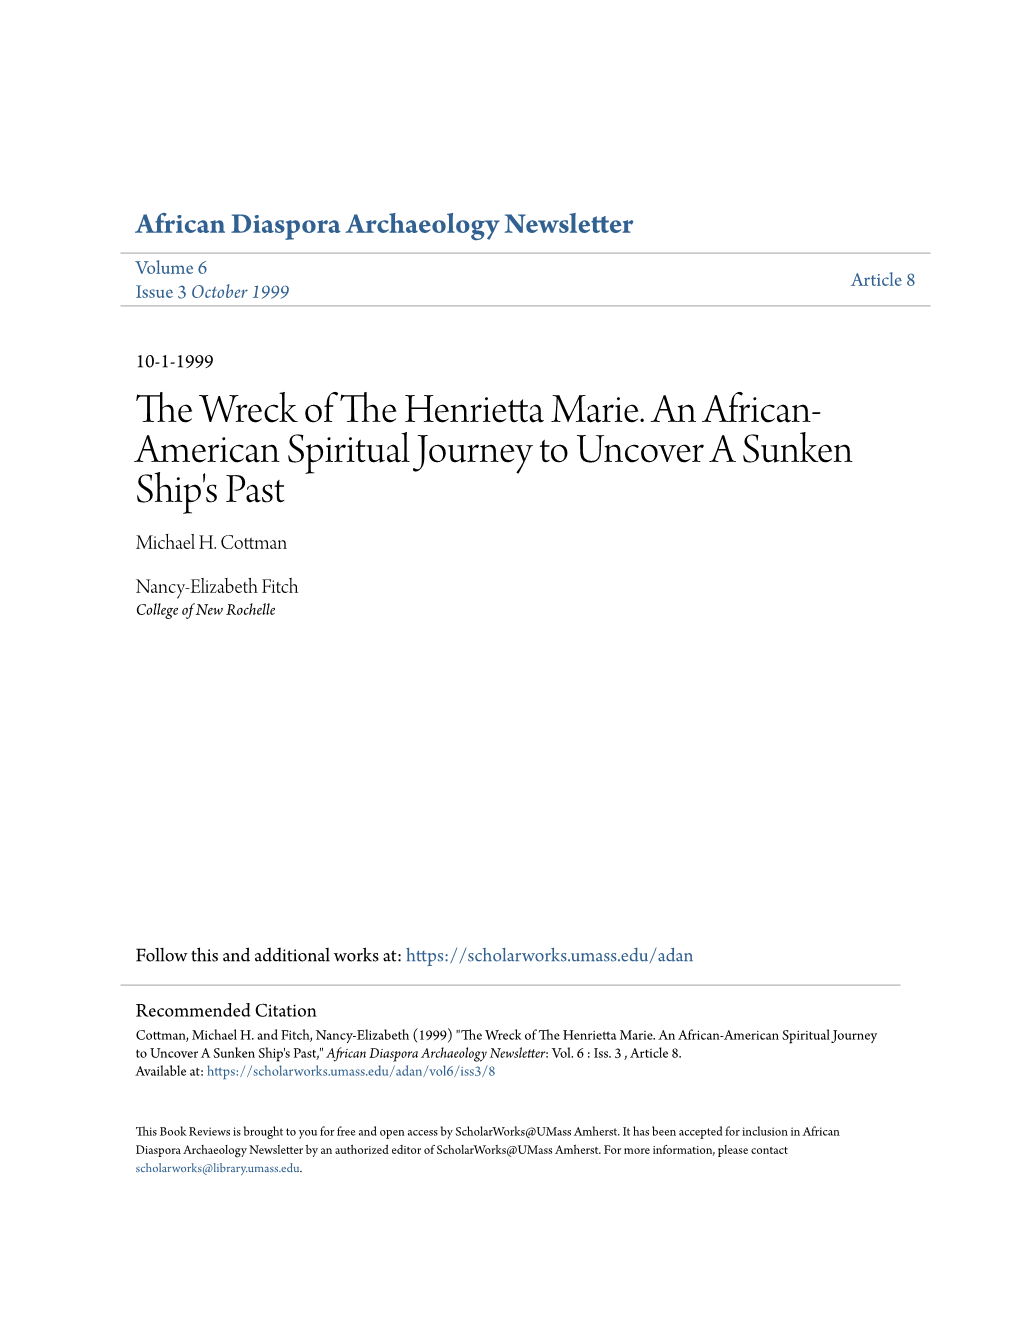 The Wreck of the Henrietta Marie. an African-American Spiritual Journey